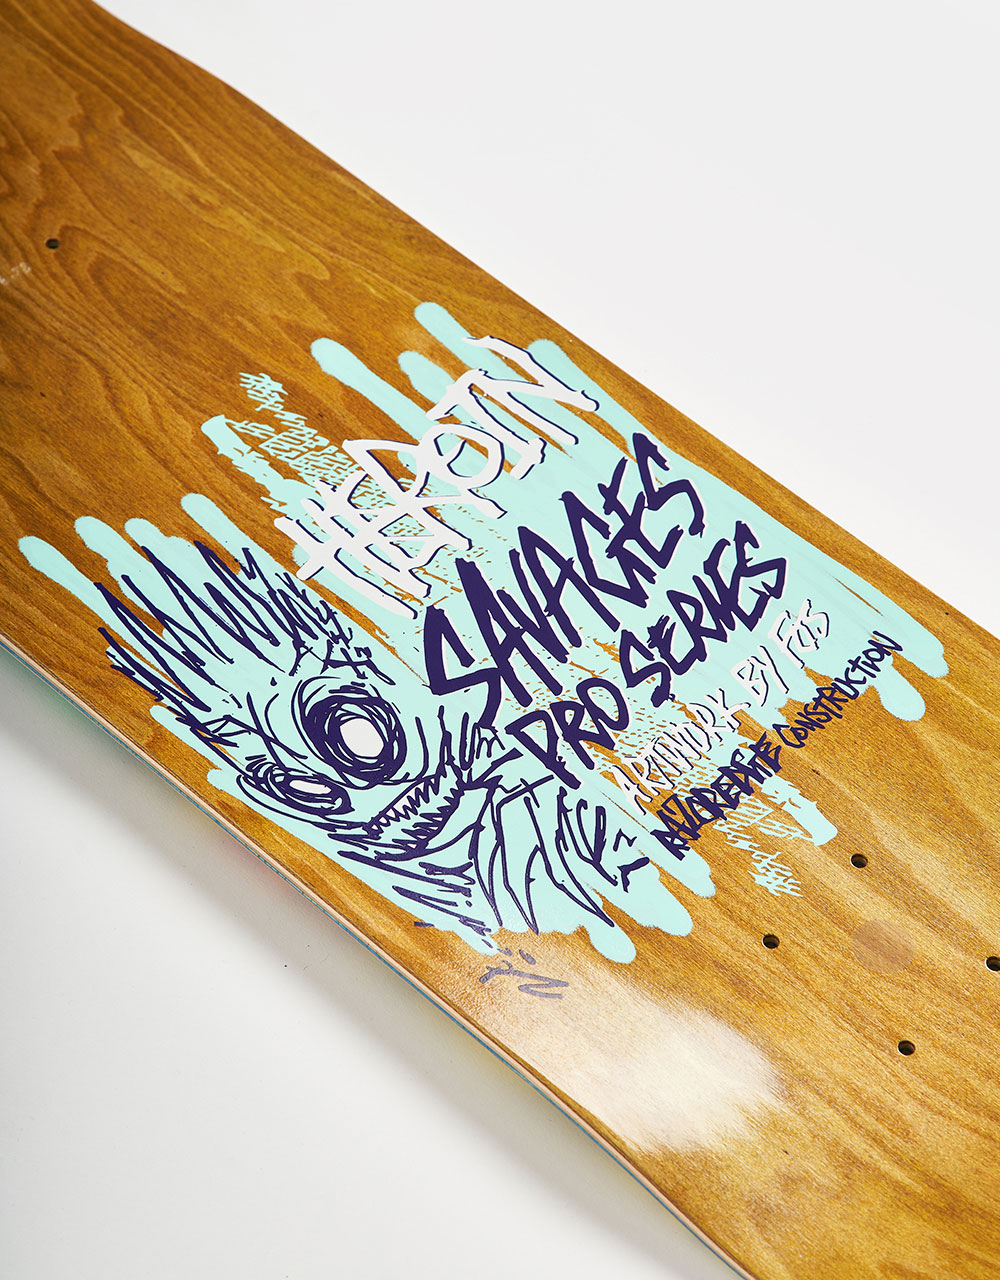 Heroin Day Savages Skateboard Deck - 8.75”